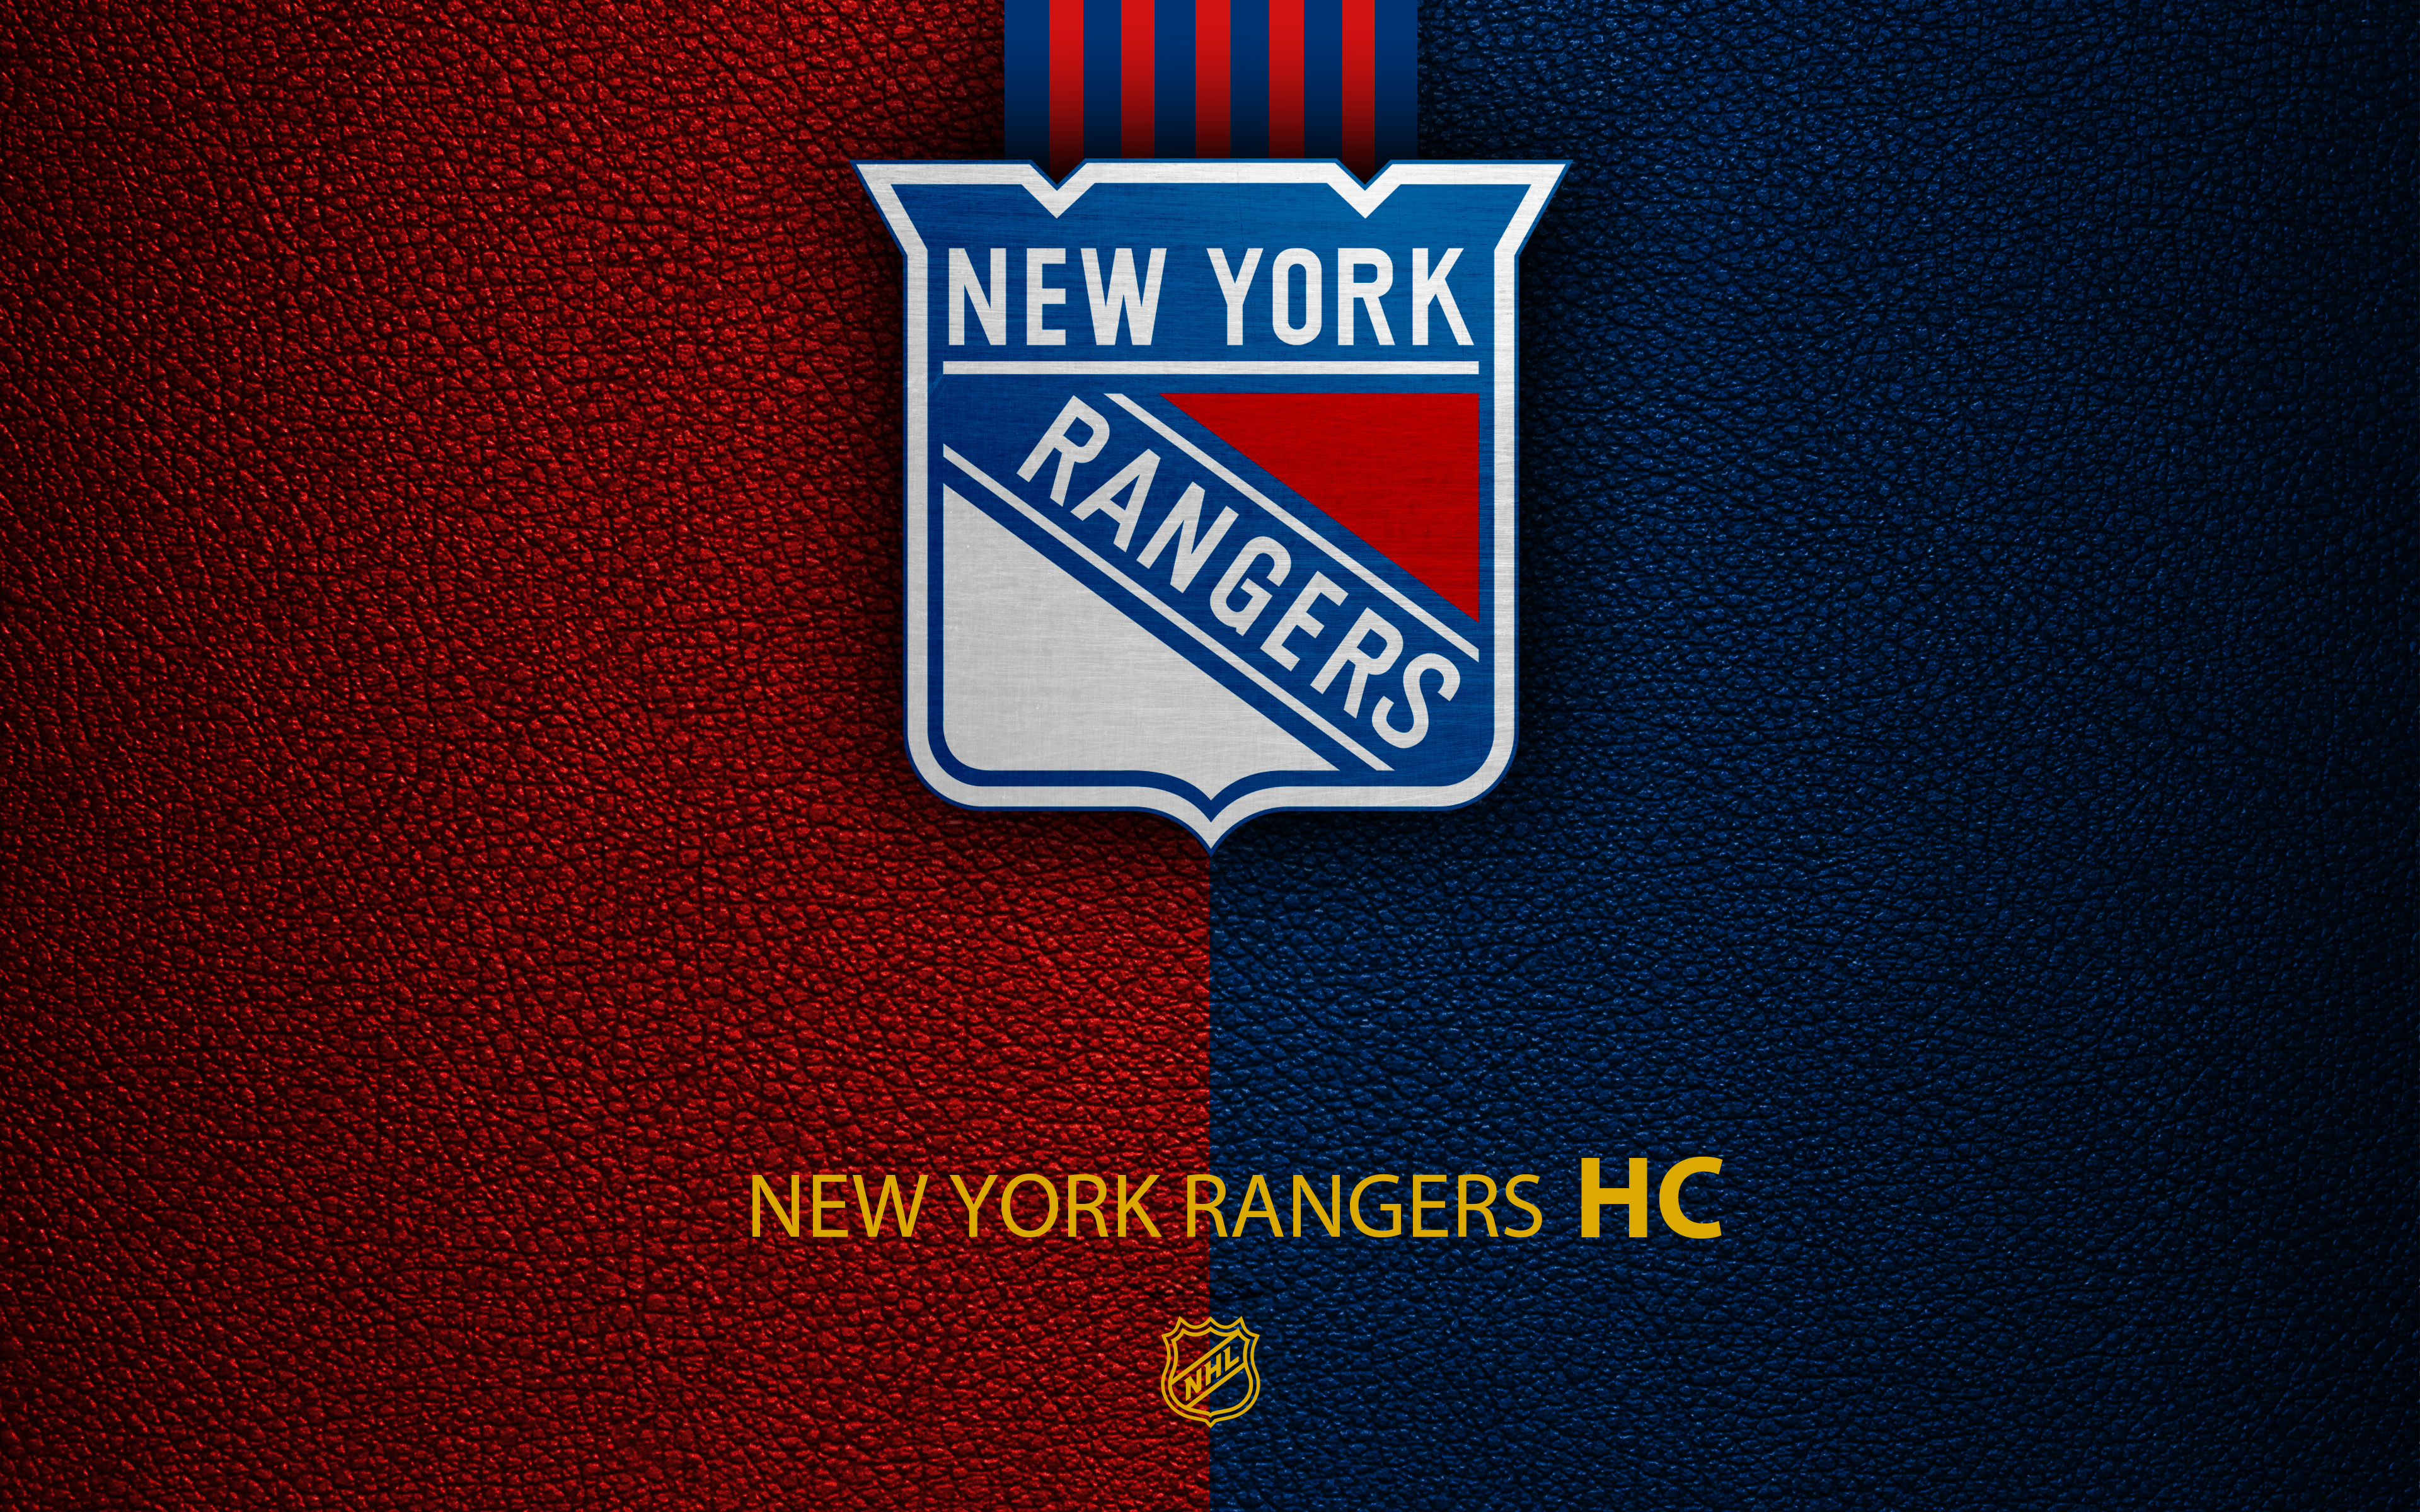 New York Rangers 4k Ultra Hd Wallpaper Background Image 3840x2400